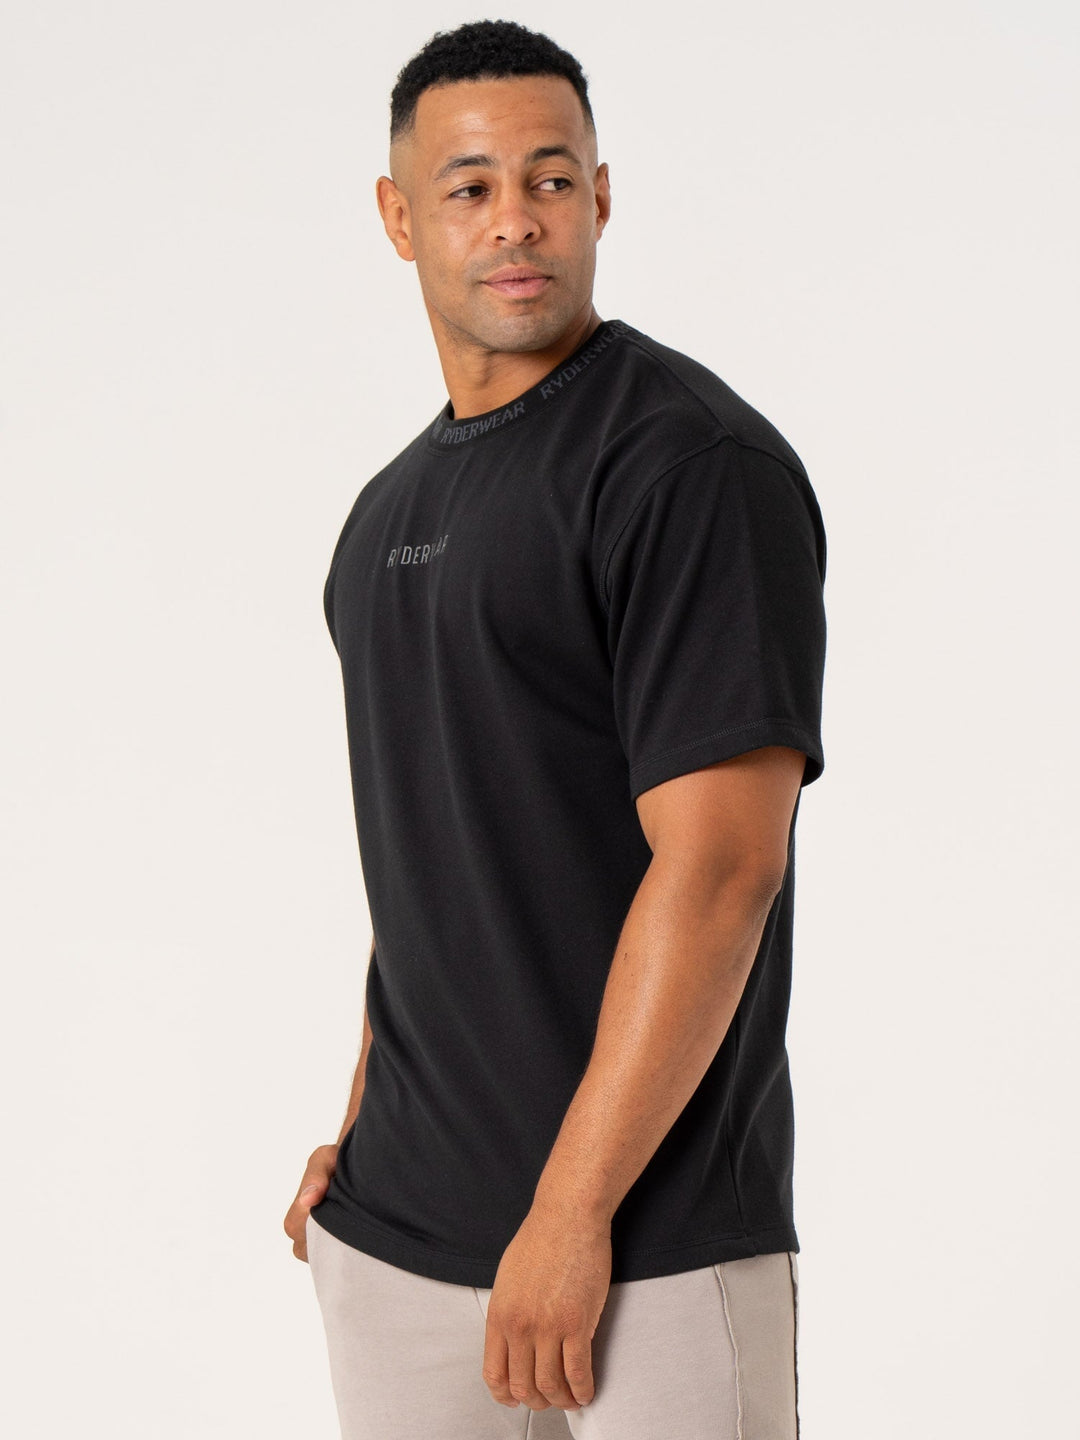 Throwback Oversized Fleece T-Shirt - Black - Ryderwear